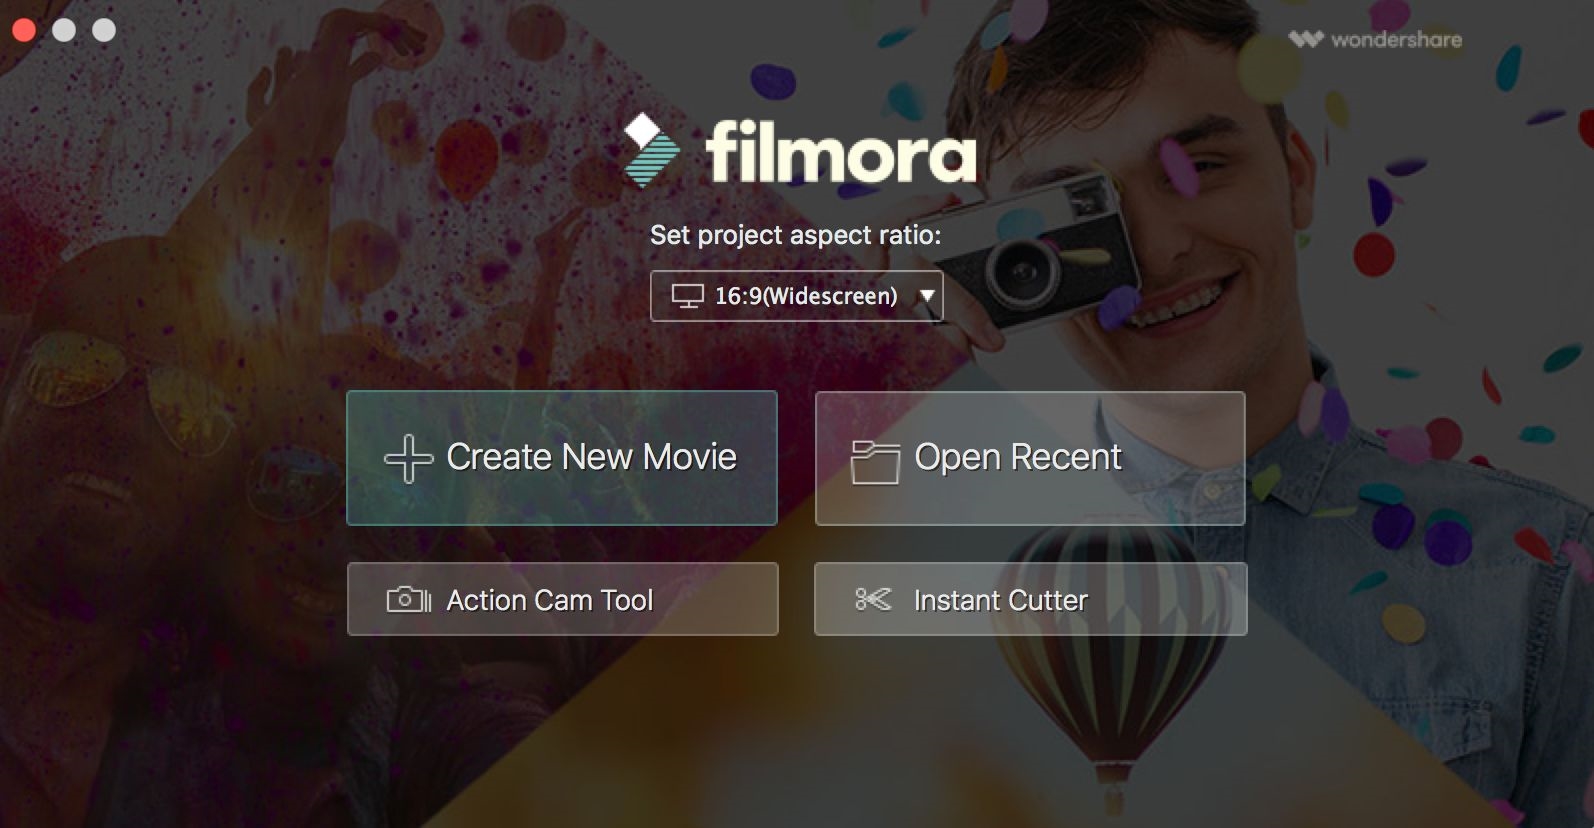 Wondershare Filmora Review: Simple Yet Best Video Editor | DeviceDaily.com